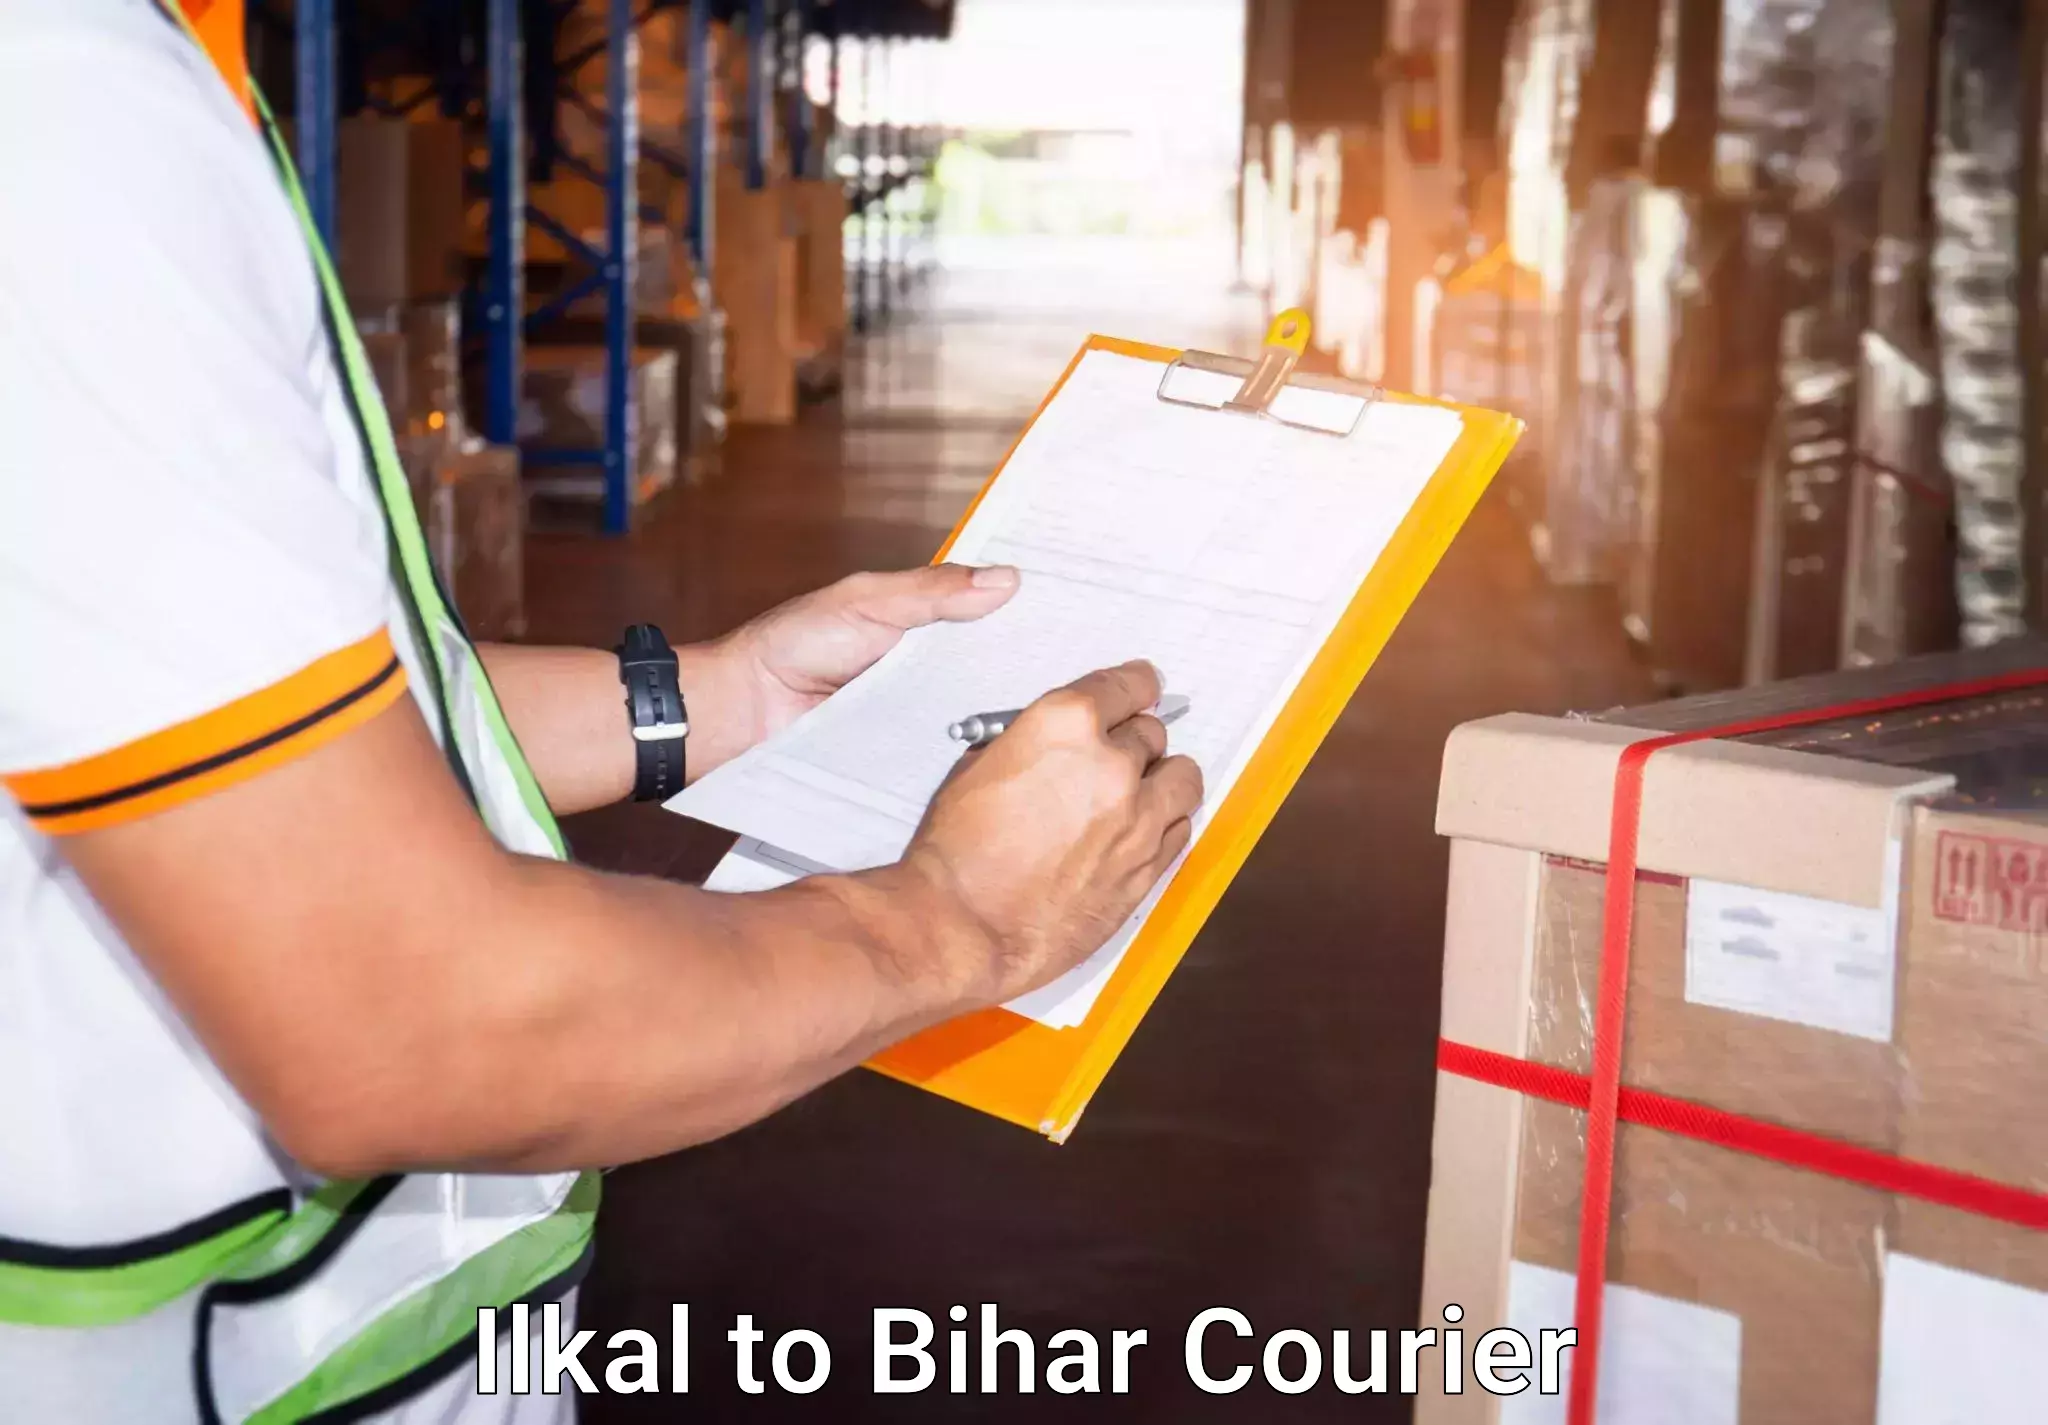 Baggage transport network Ilkal to Bihar Sharif